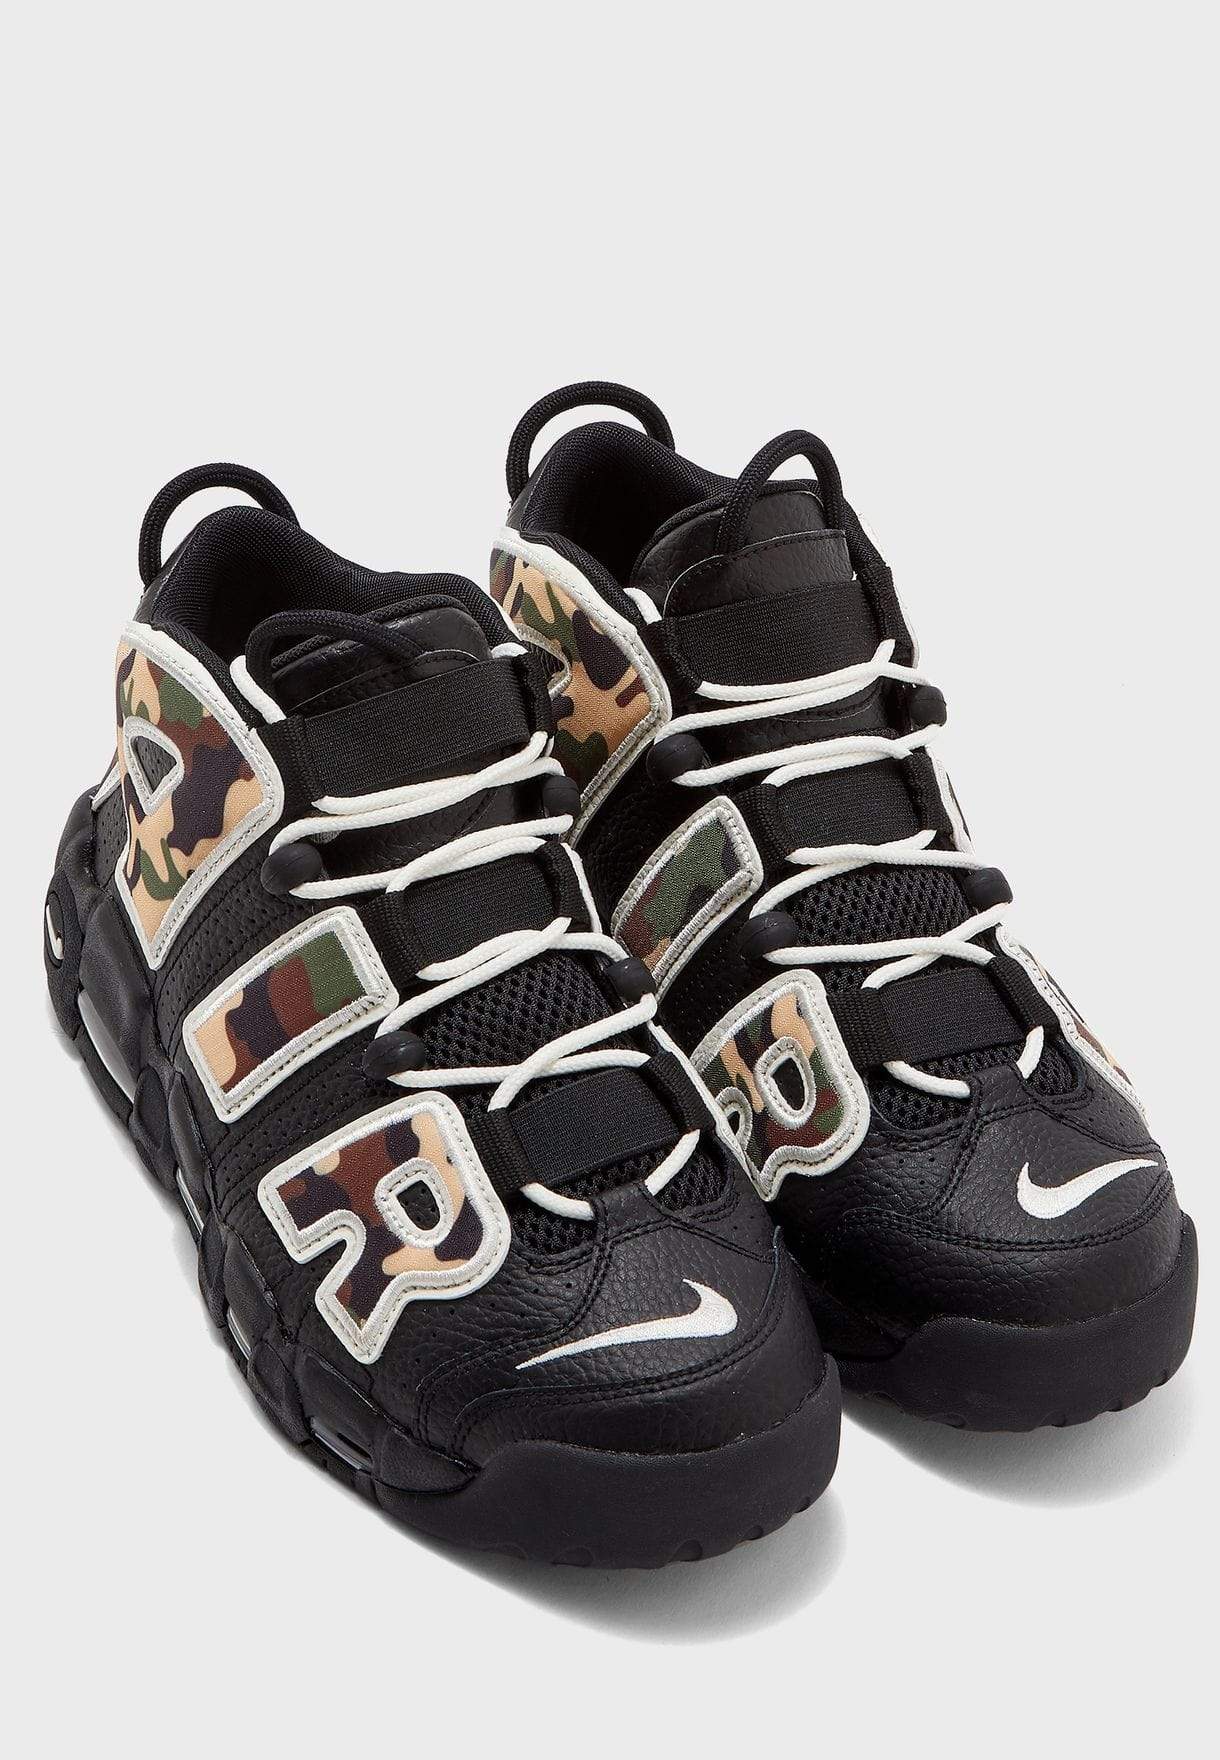 NIKE Athletic Shoes 46 / black-sail-lt british tan AIR MORE UPTEMPO 96 CAMO